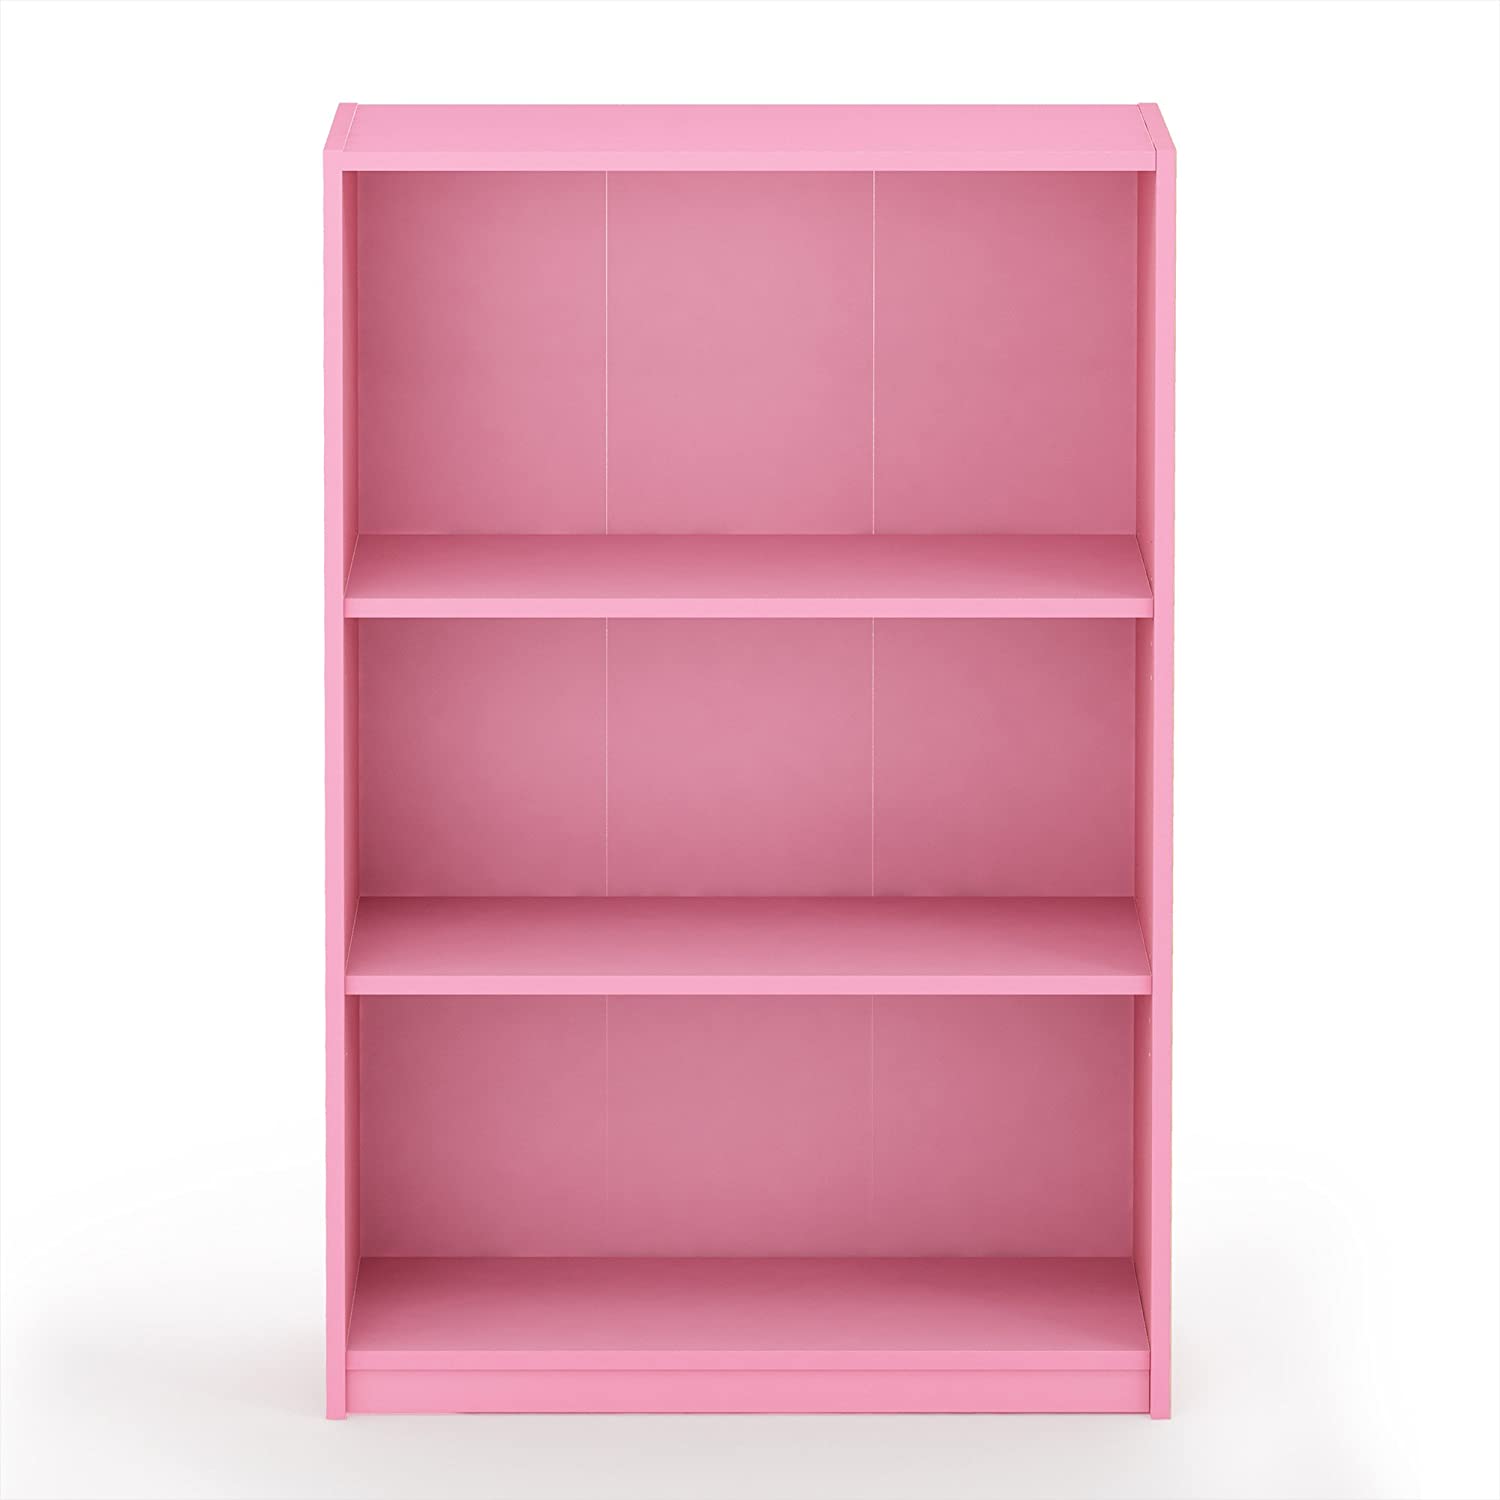 Bookshelf: 3-Tier Adjustable Shelf